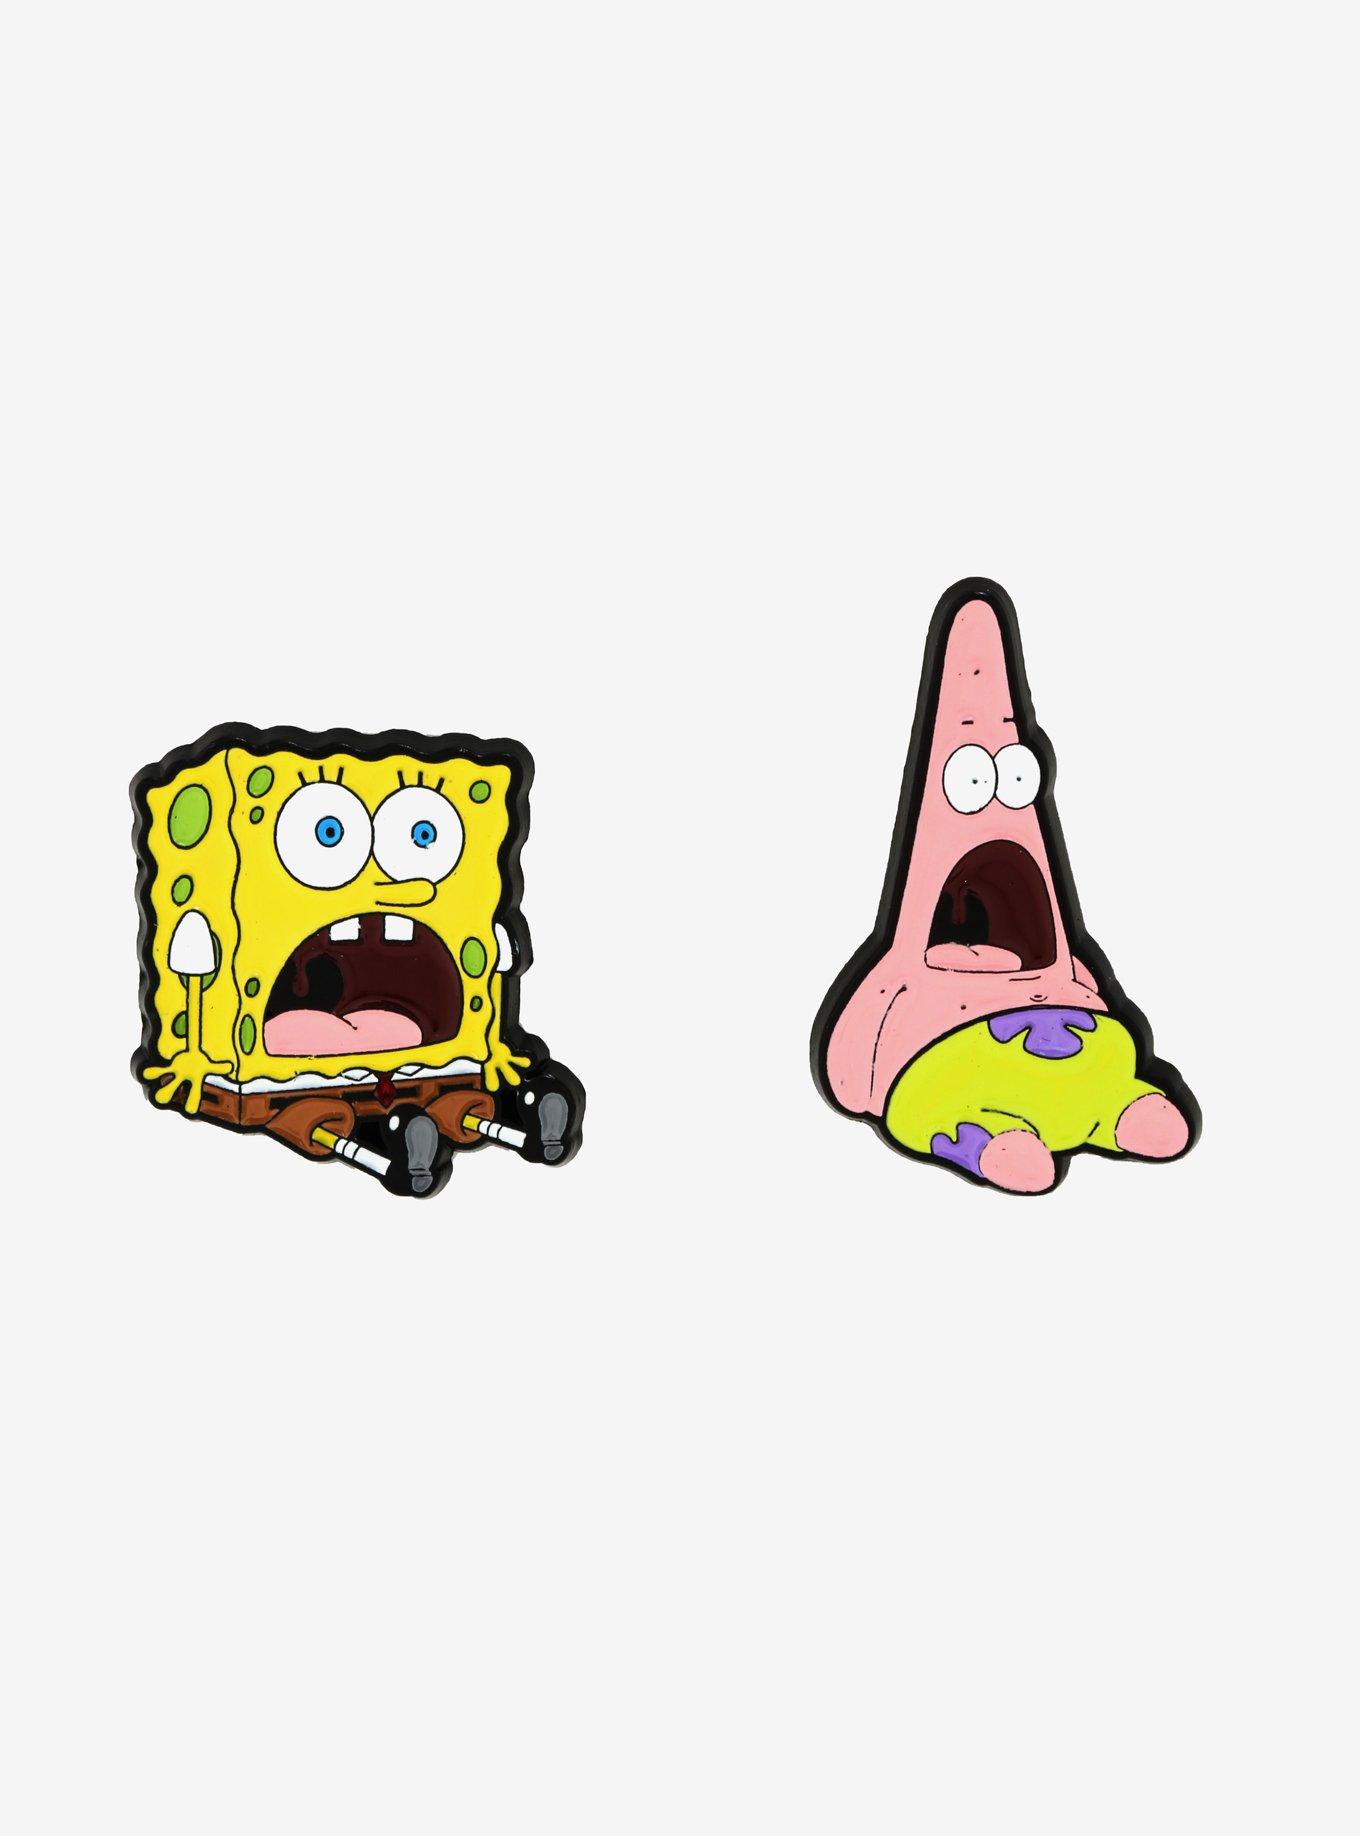 spongebob surprised patrick